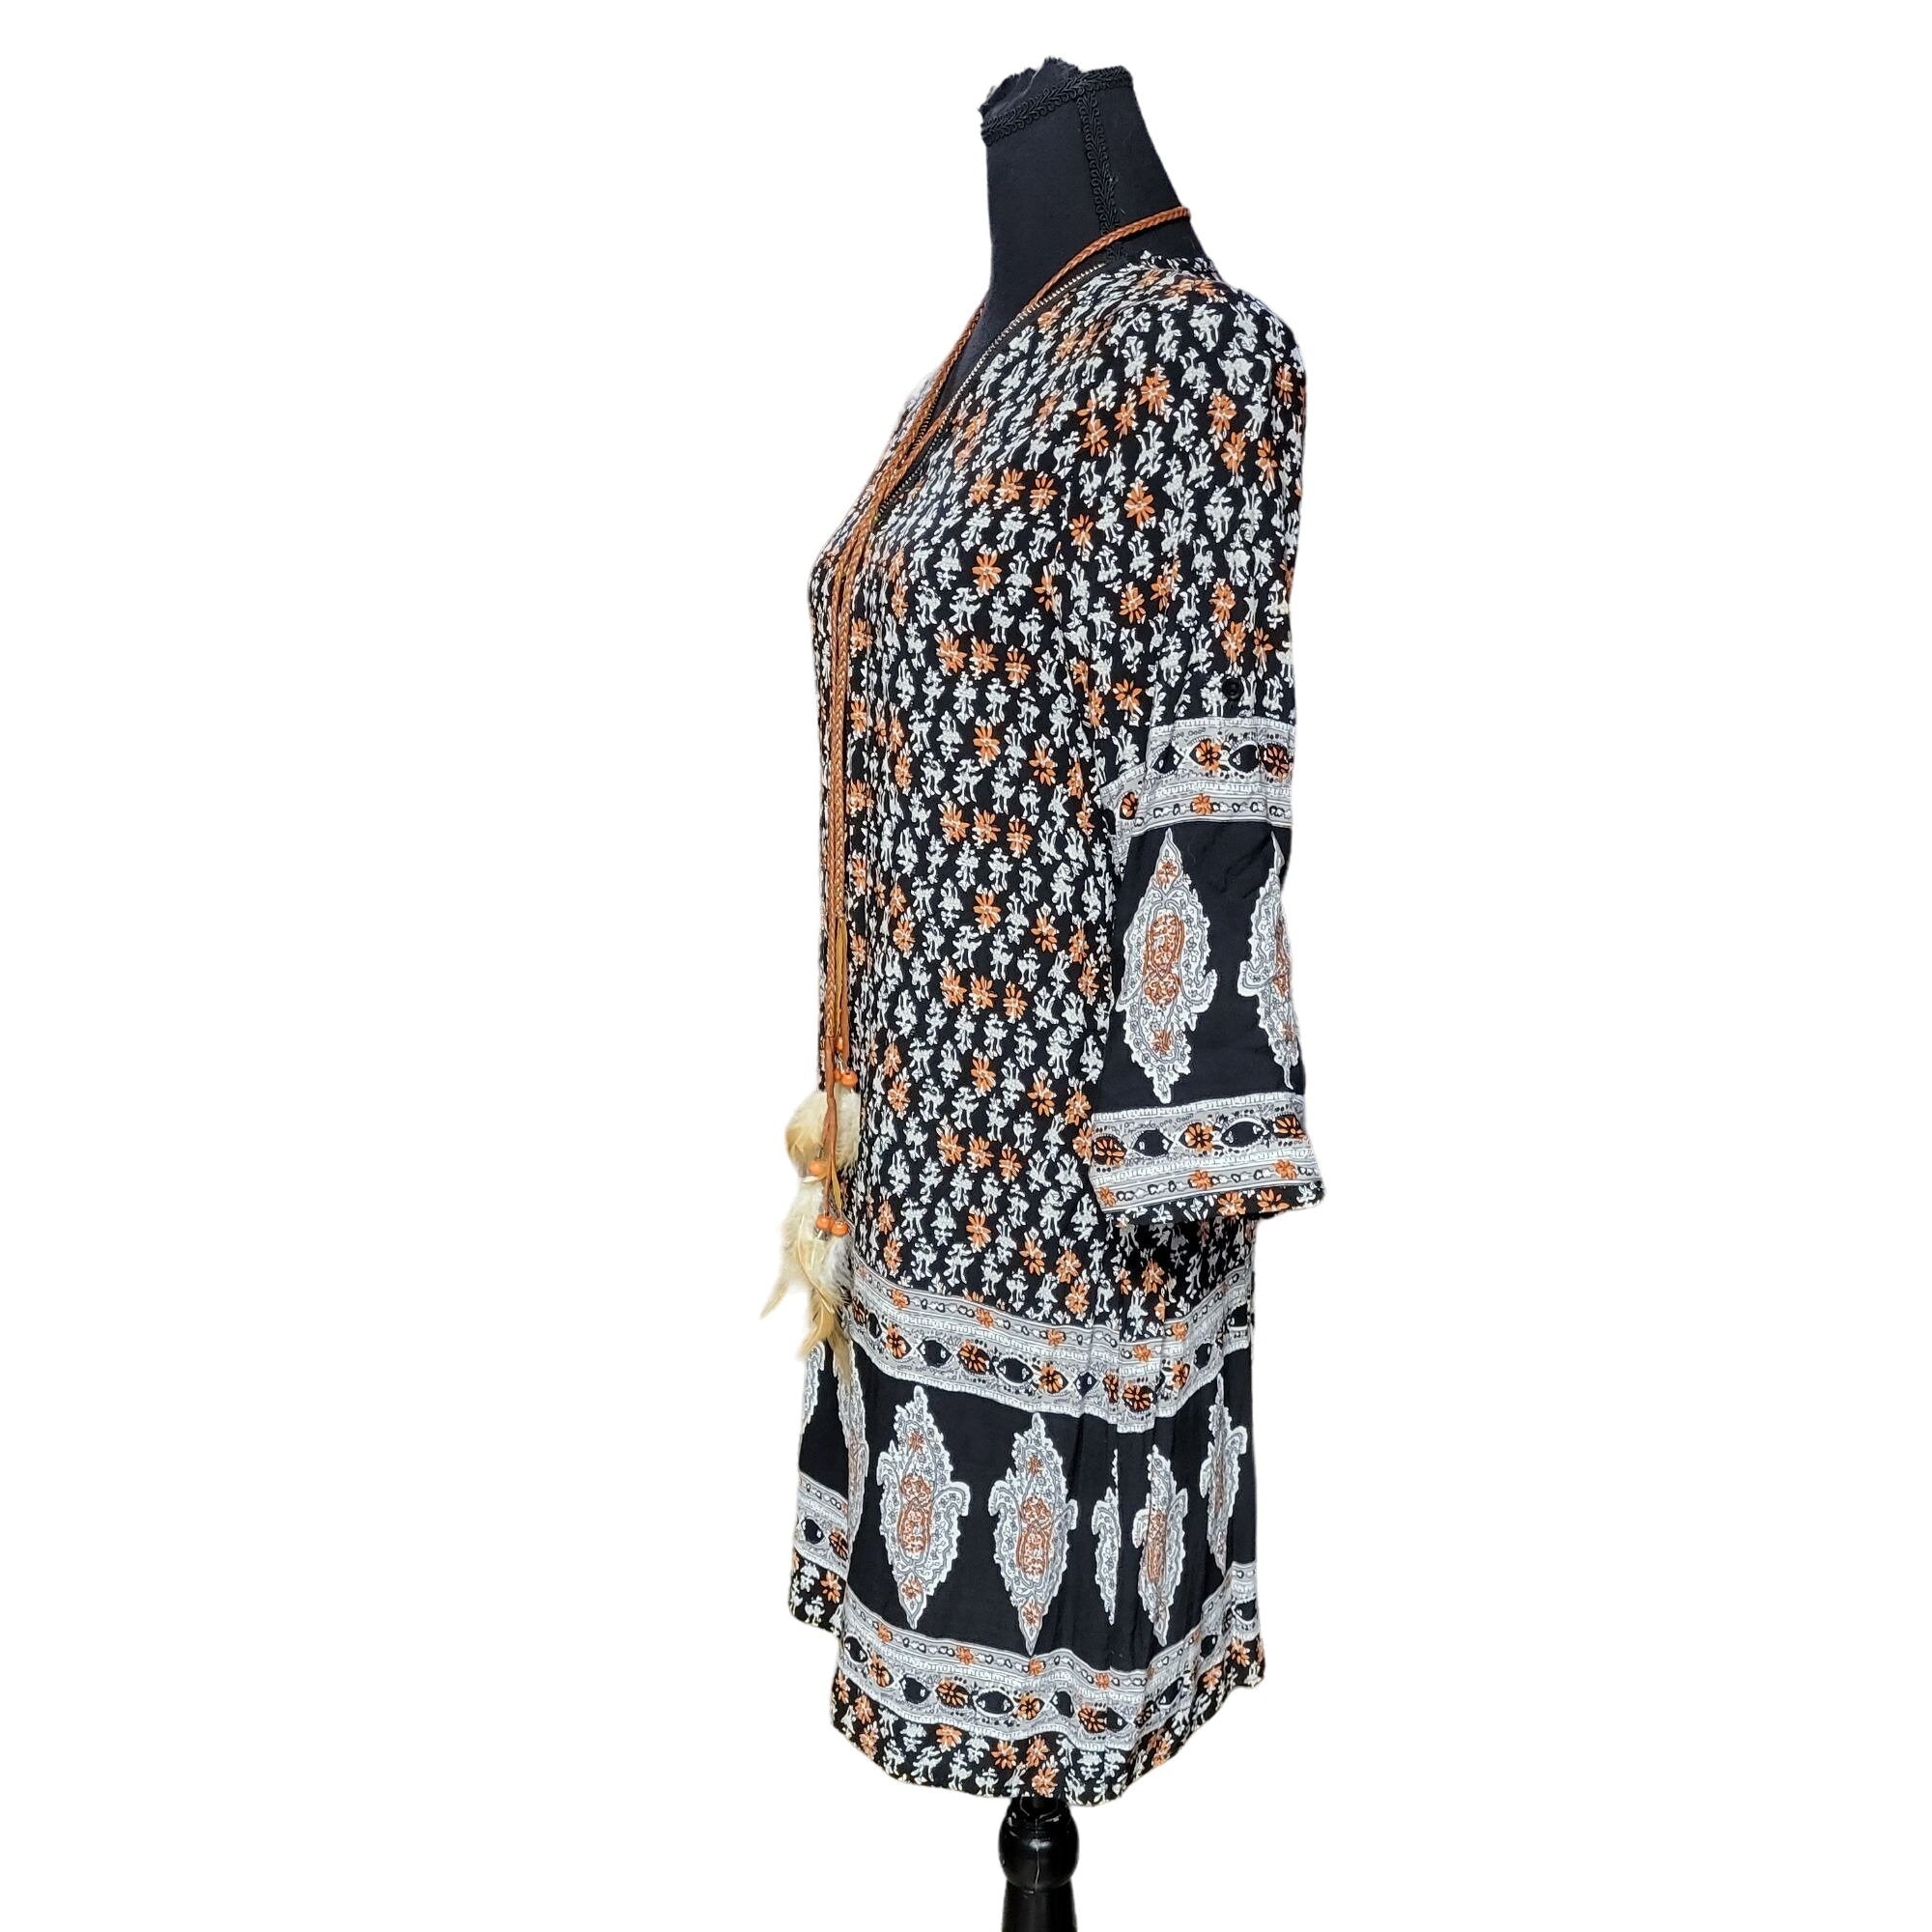 Kessley Lightweight Tribal Themed Mini-Dress, Size Small